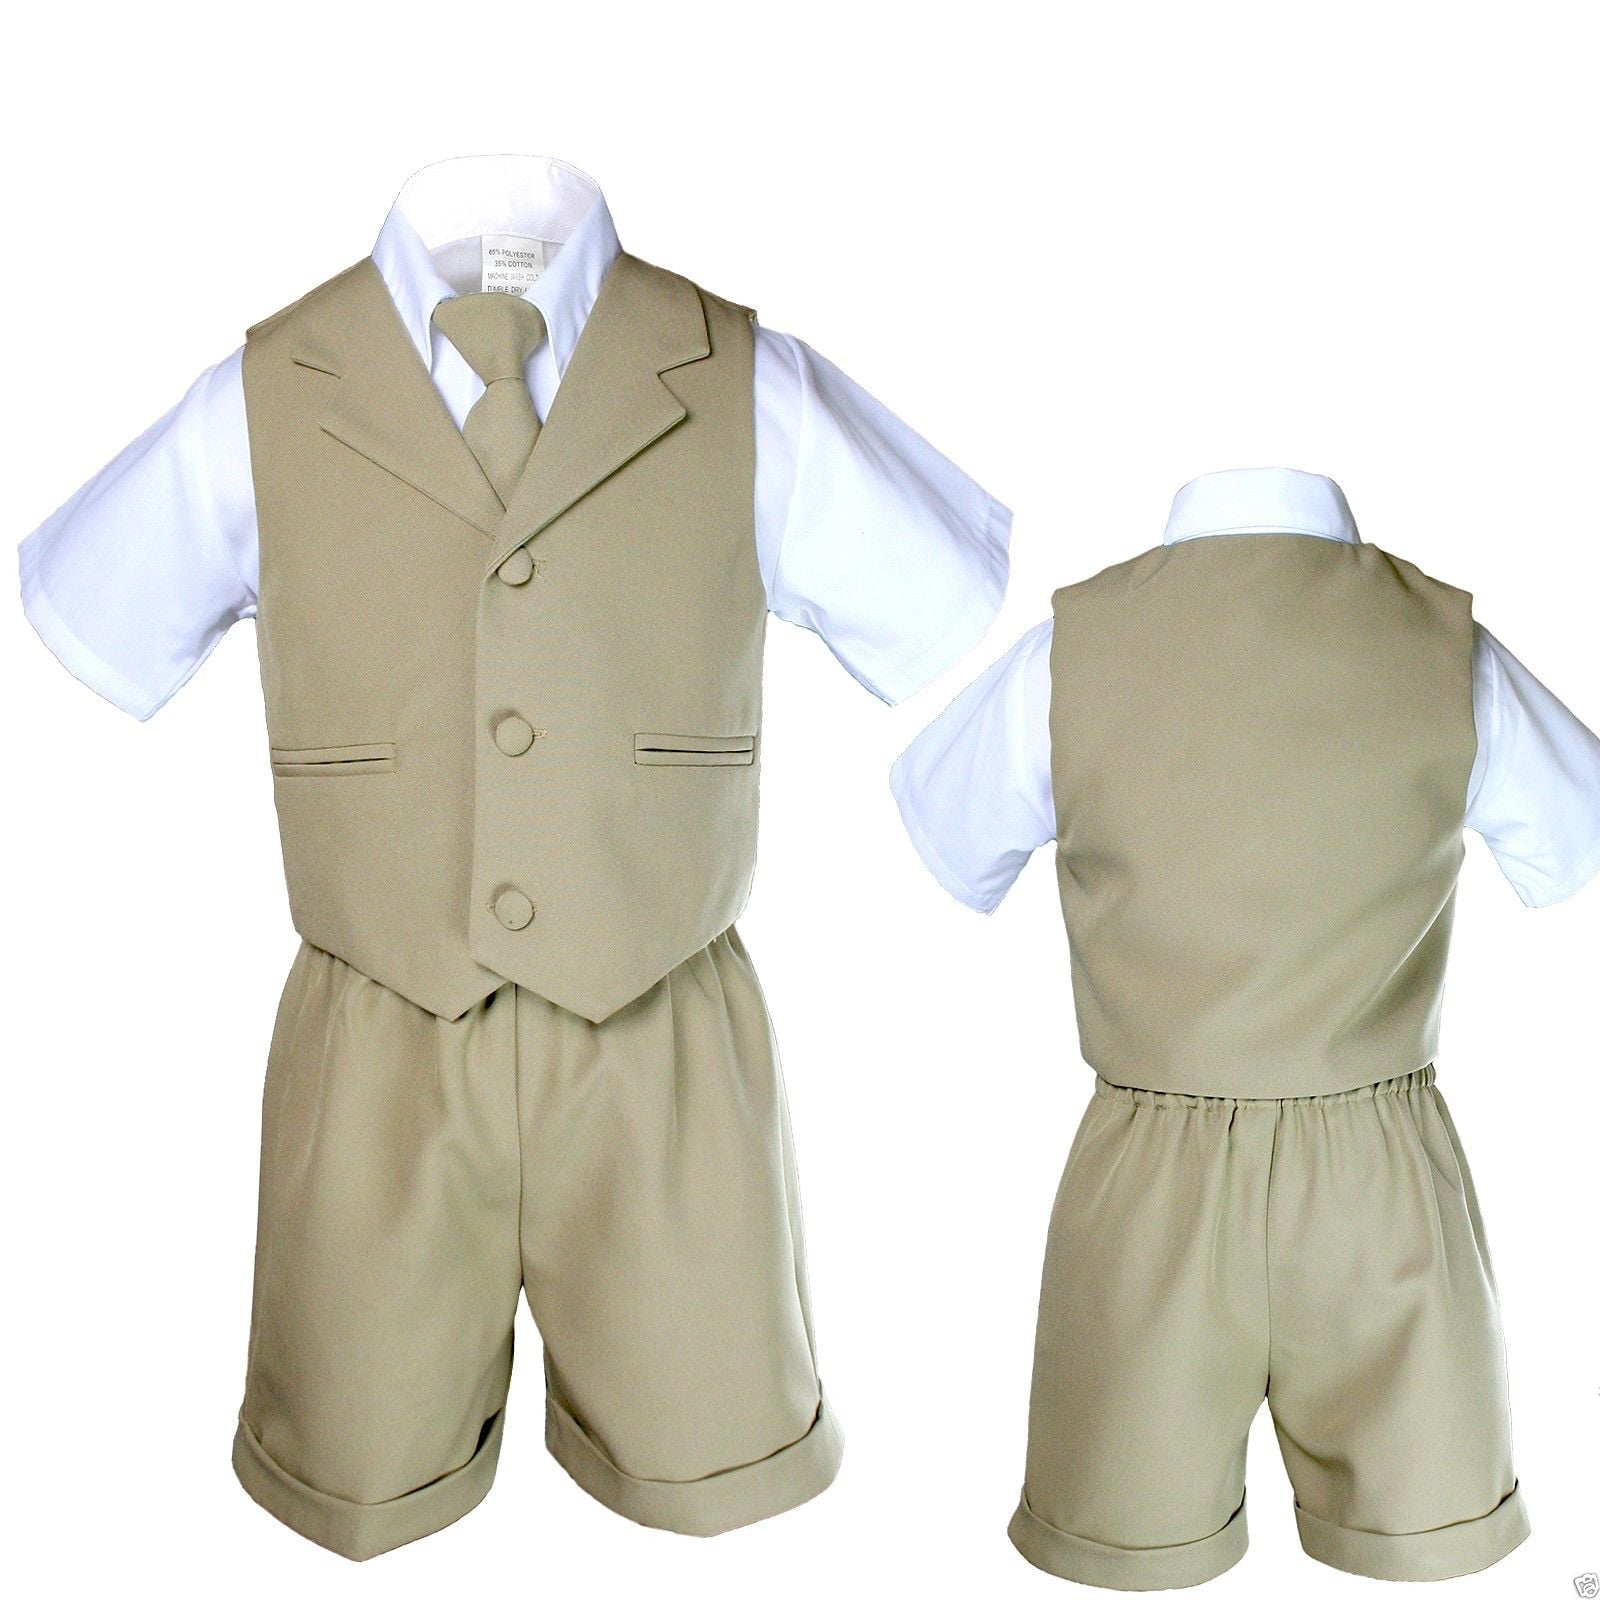 New Baby Infant Boy & Toddler Eton Formal Vest shorts Suit New born to 4T Black 